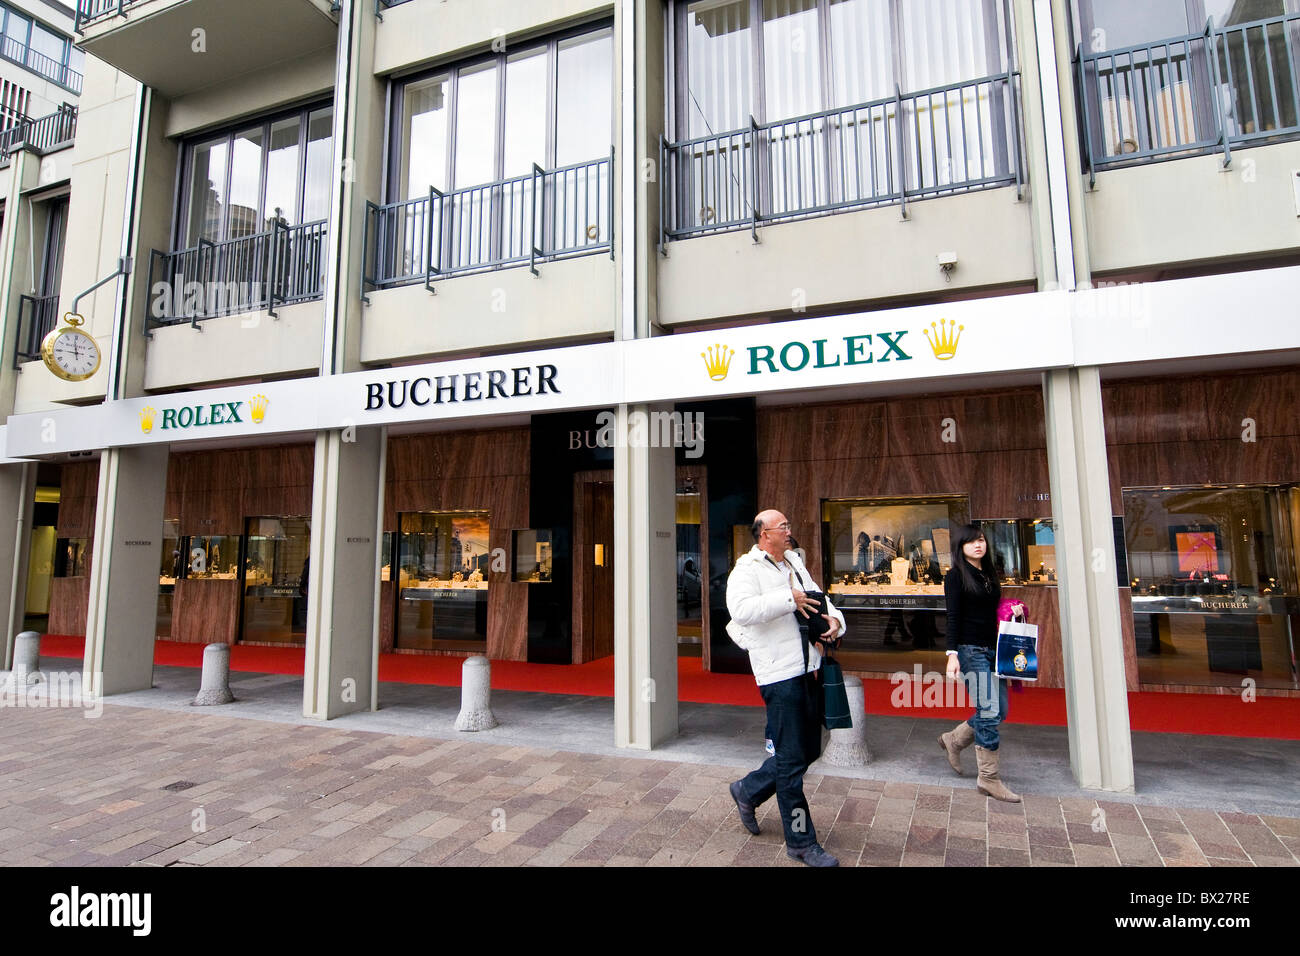 Bucherer shop, Lugano, Switzerland Stock Photo - Alamy